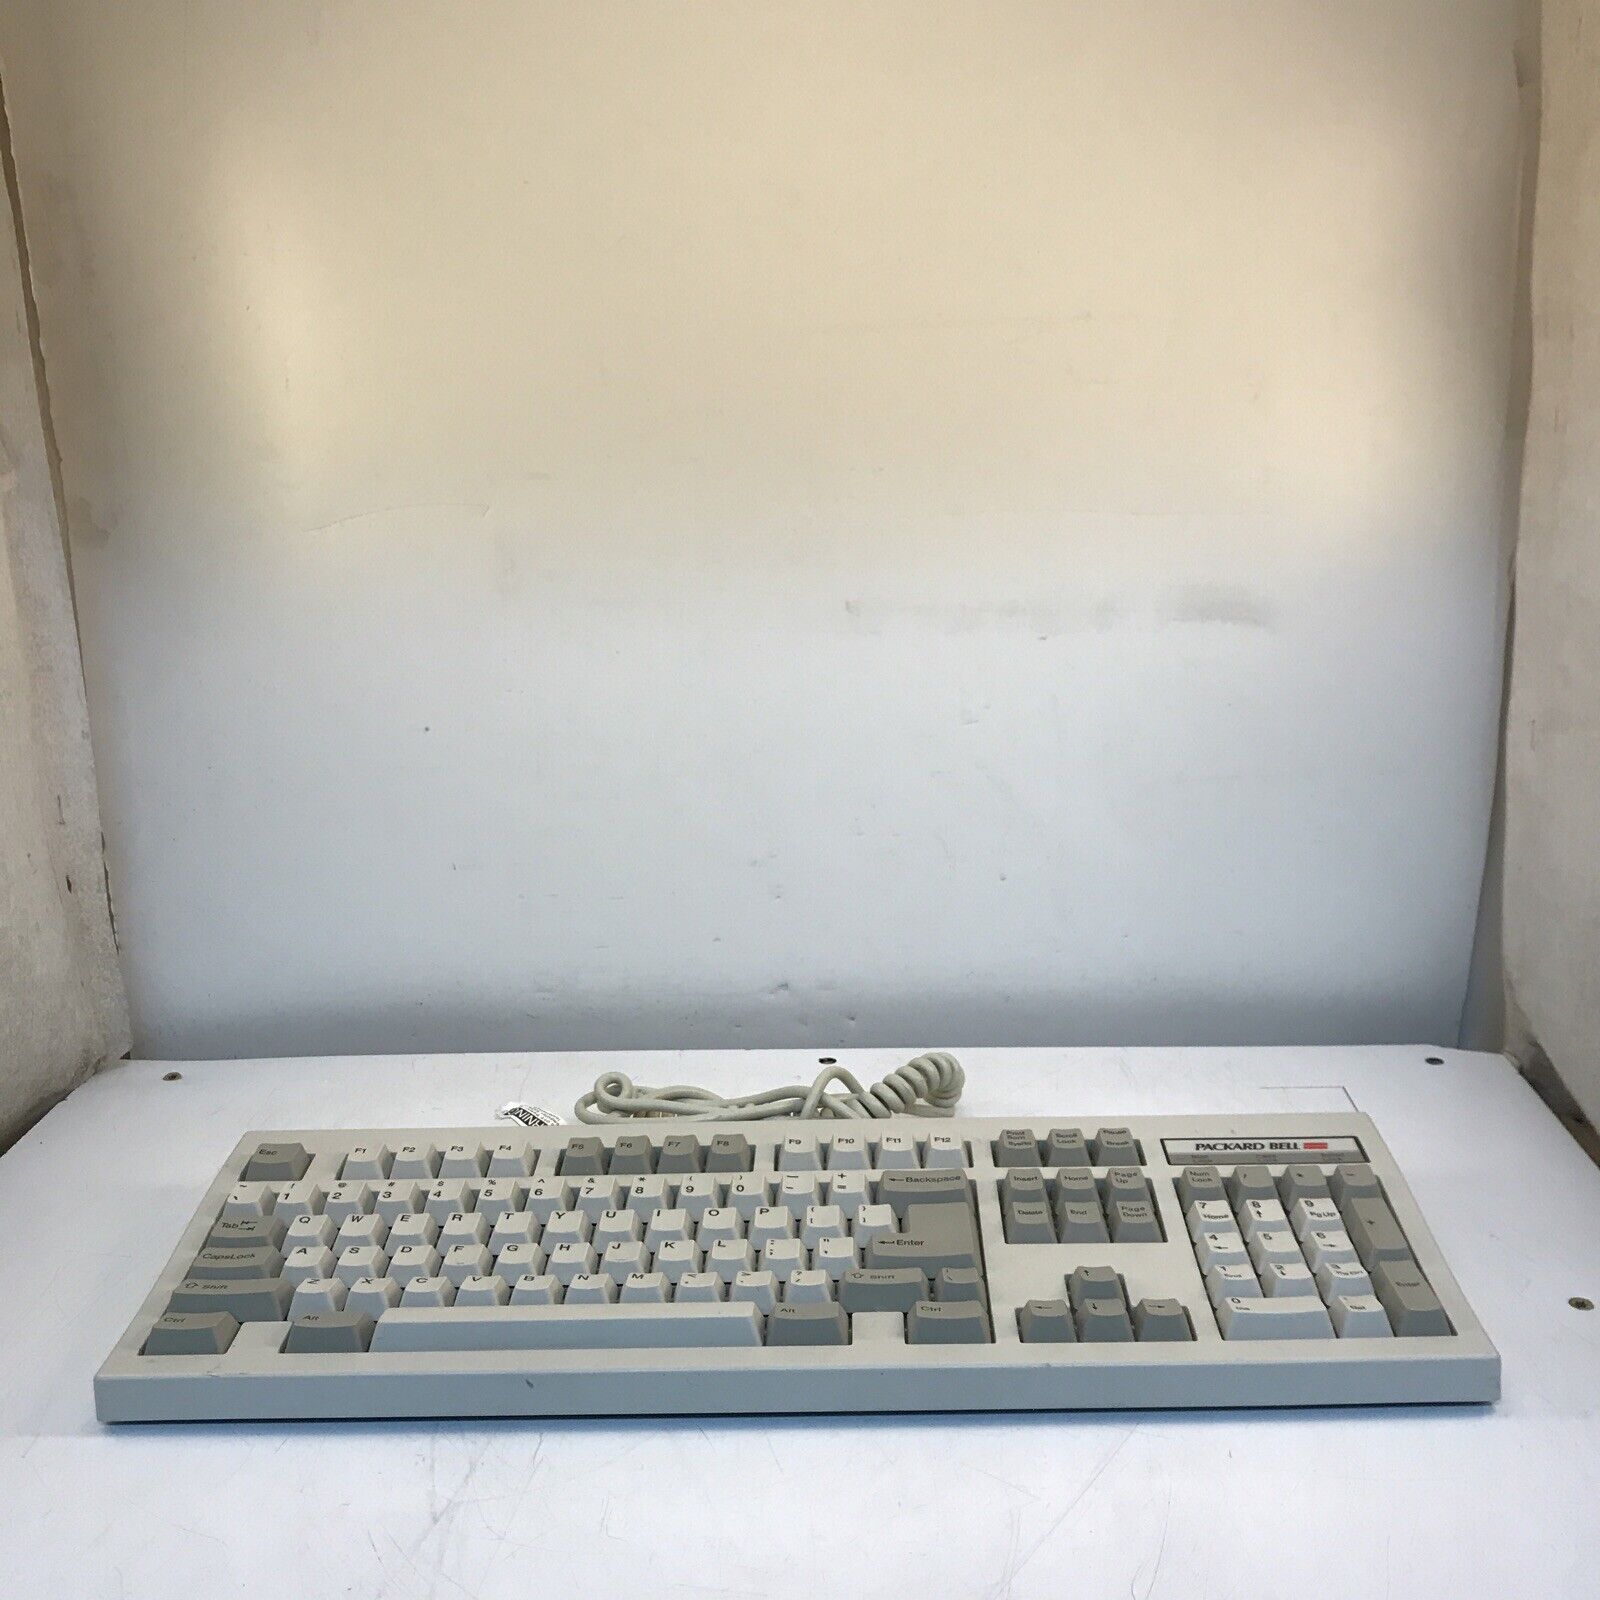 VTG Packard Bell Keyboard 5139 tested working